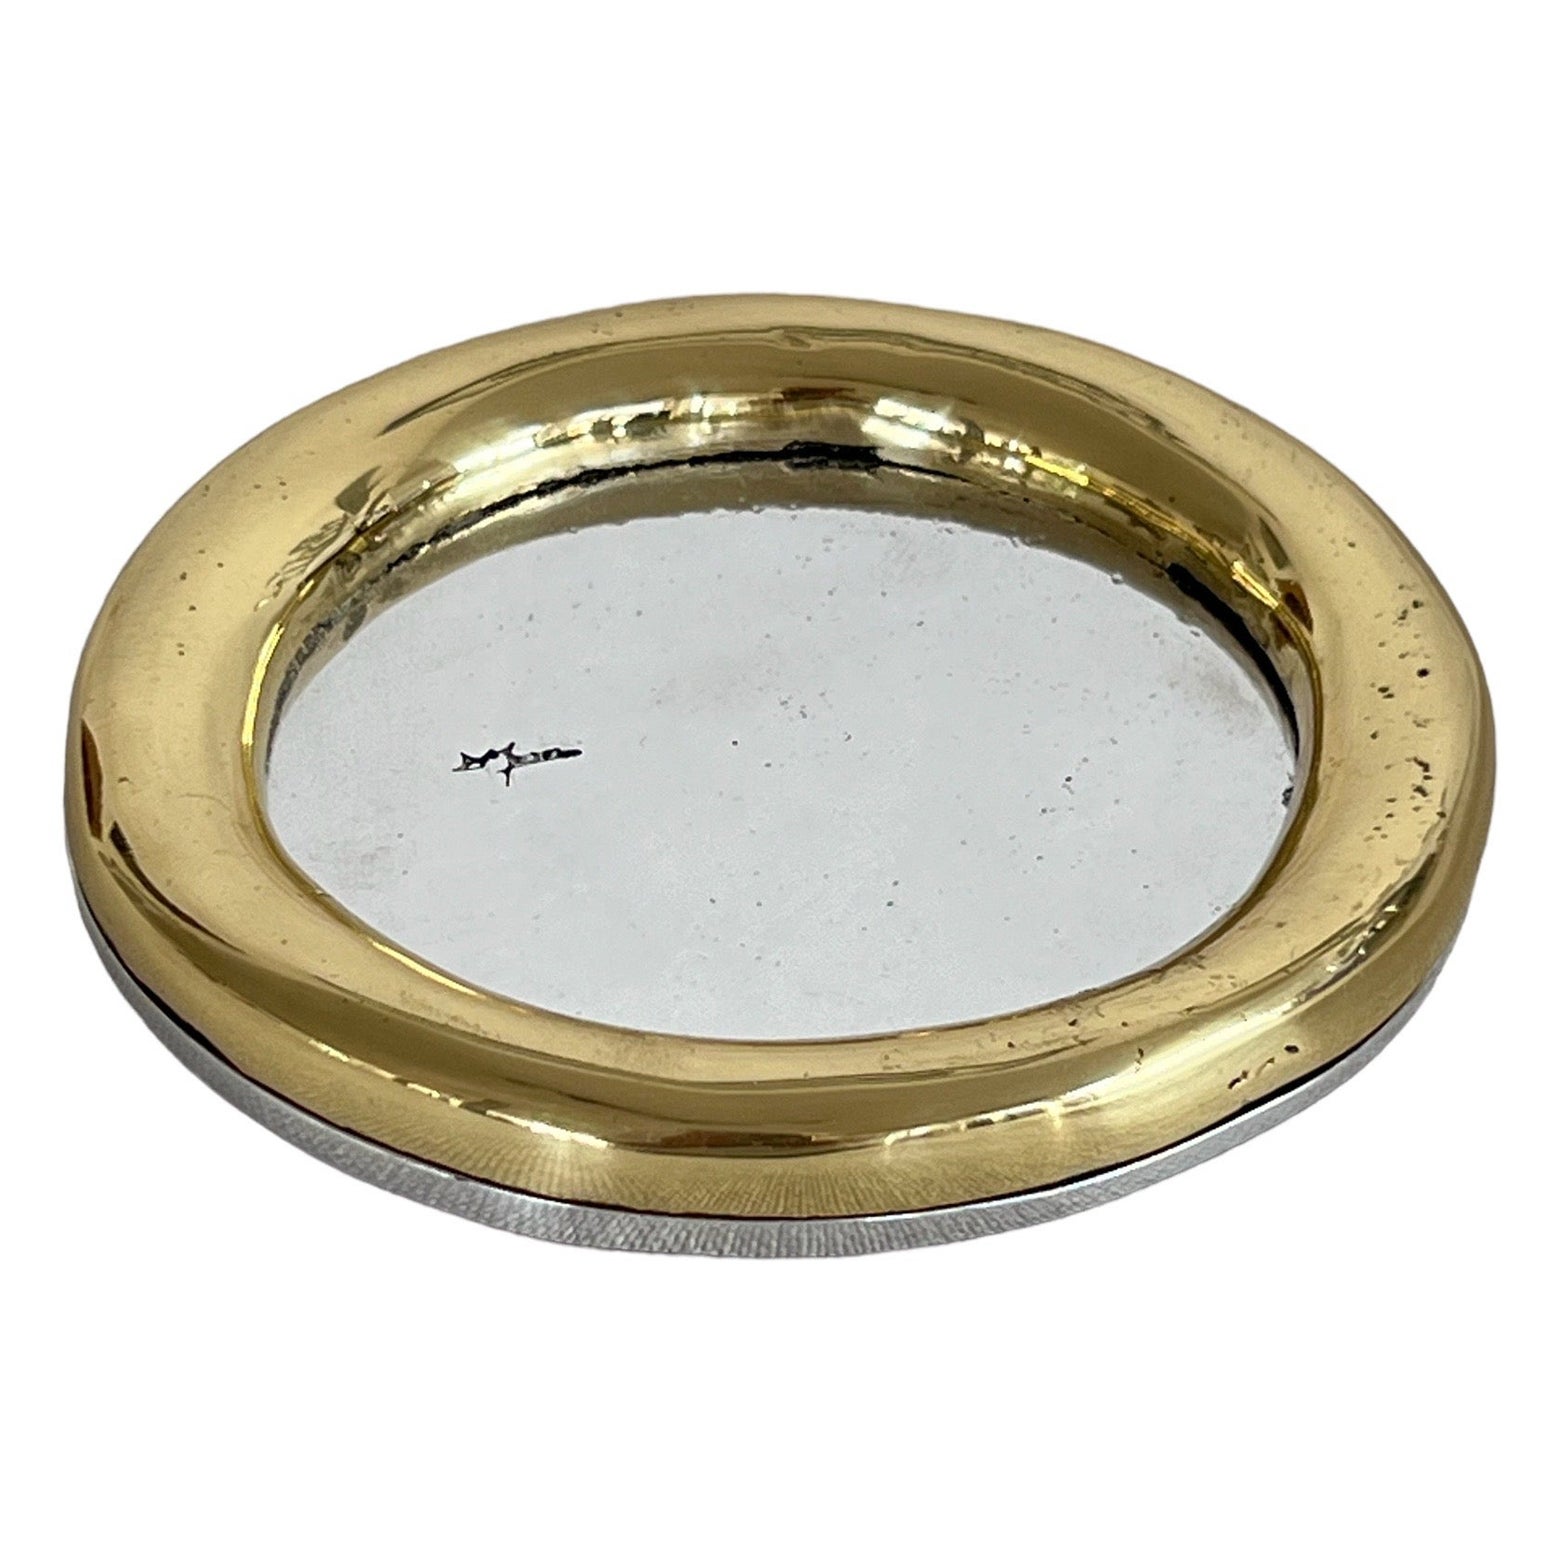 Ring C052 aus sandgegossenem Aluminiumguss-Lack, handgefertigt lackiert